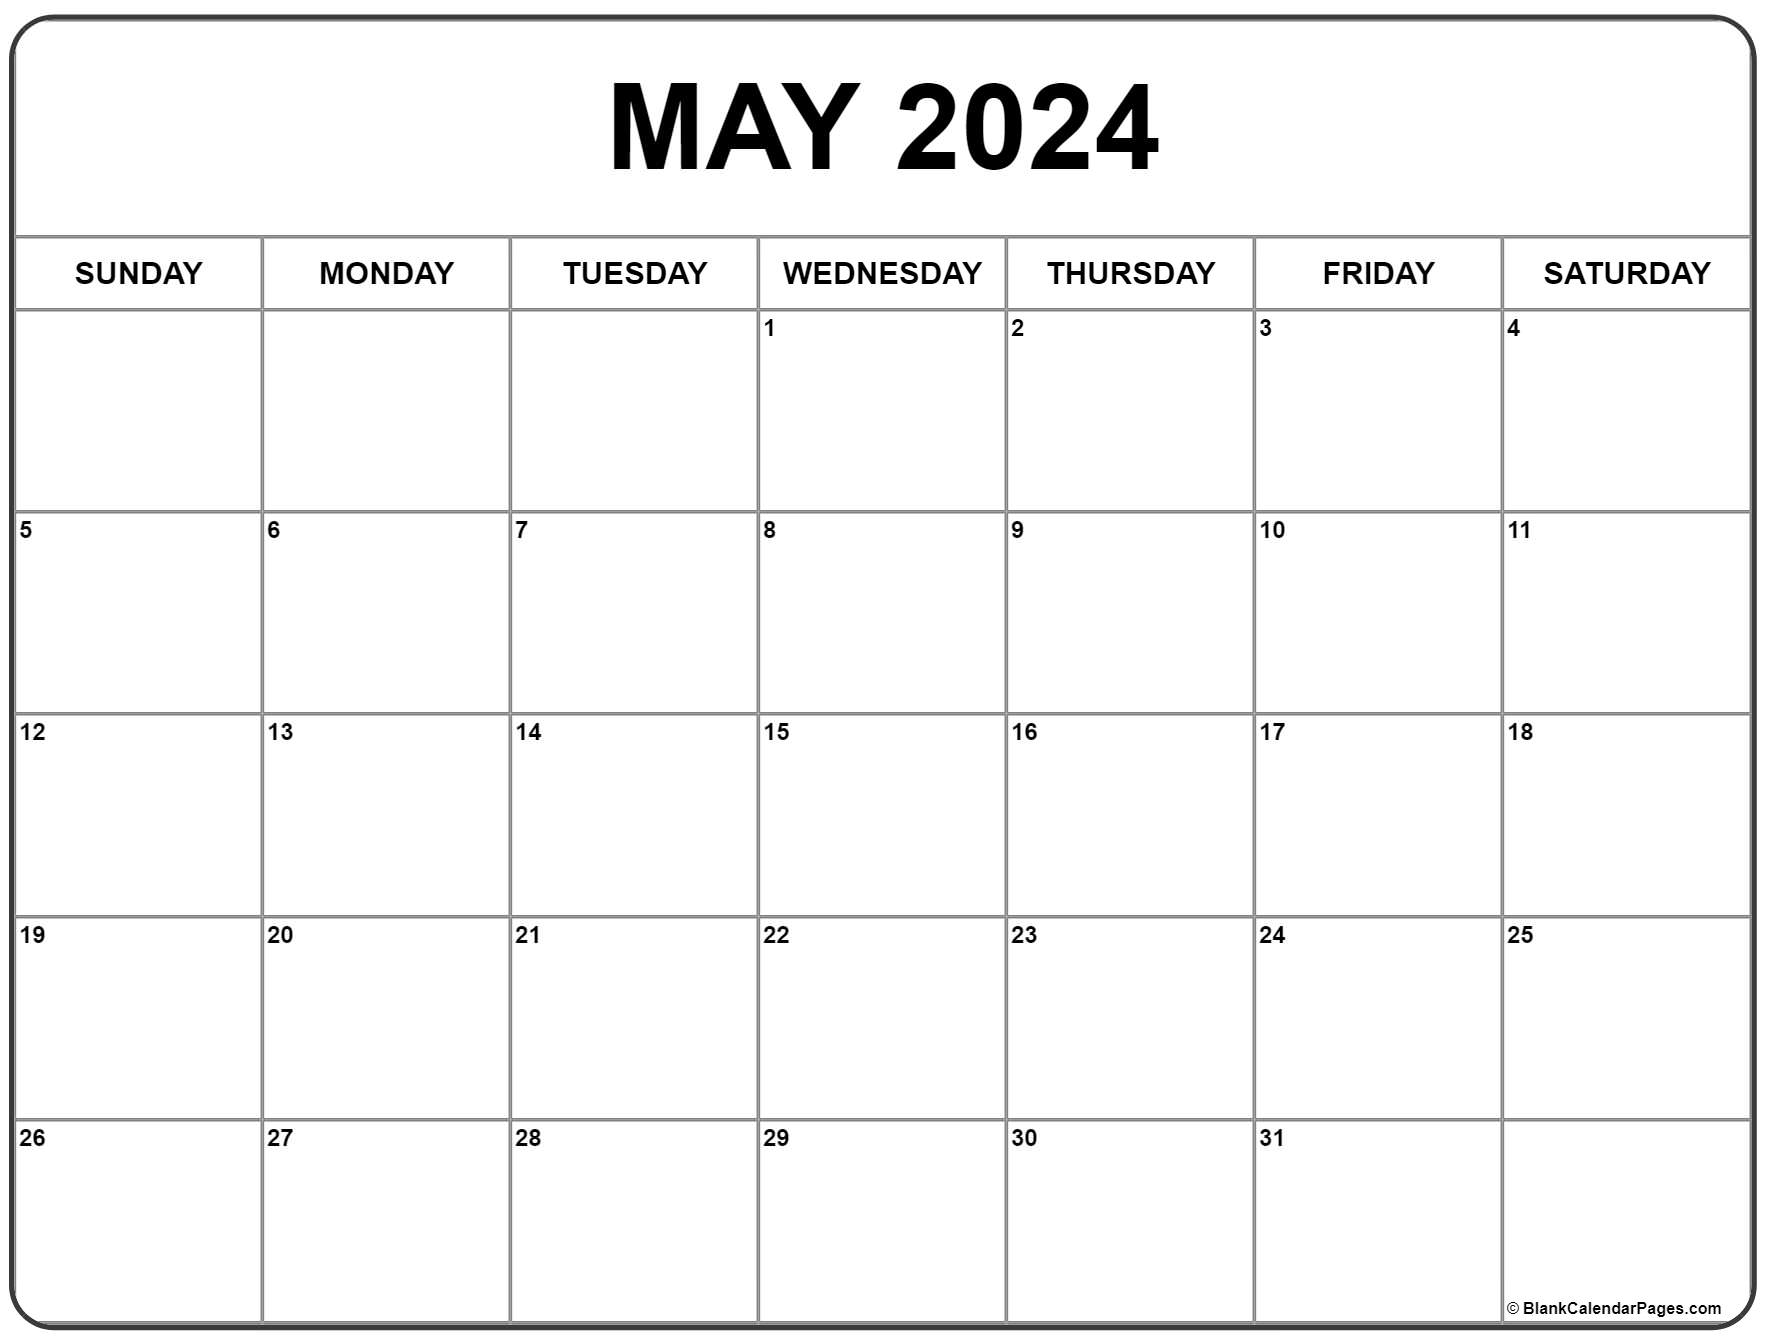 May 2024 Calendar | Free Printable Calendar for Free-Printable-Calendar May 2024